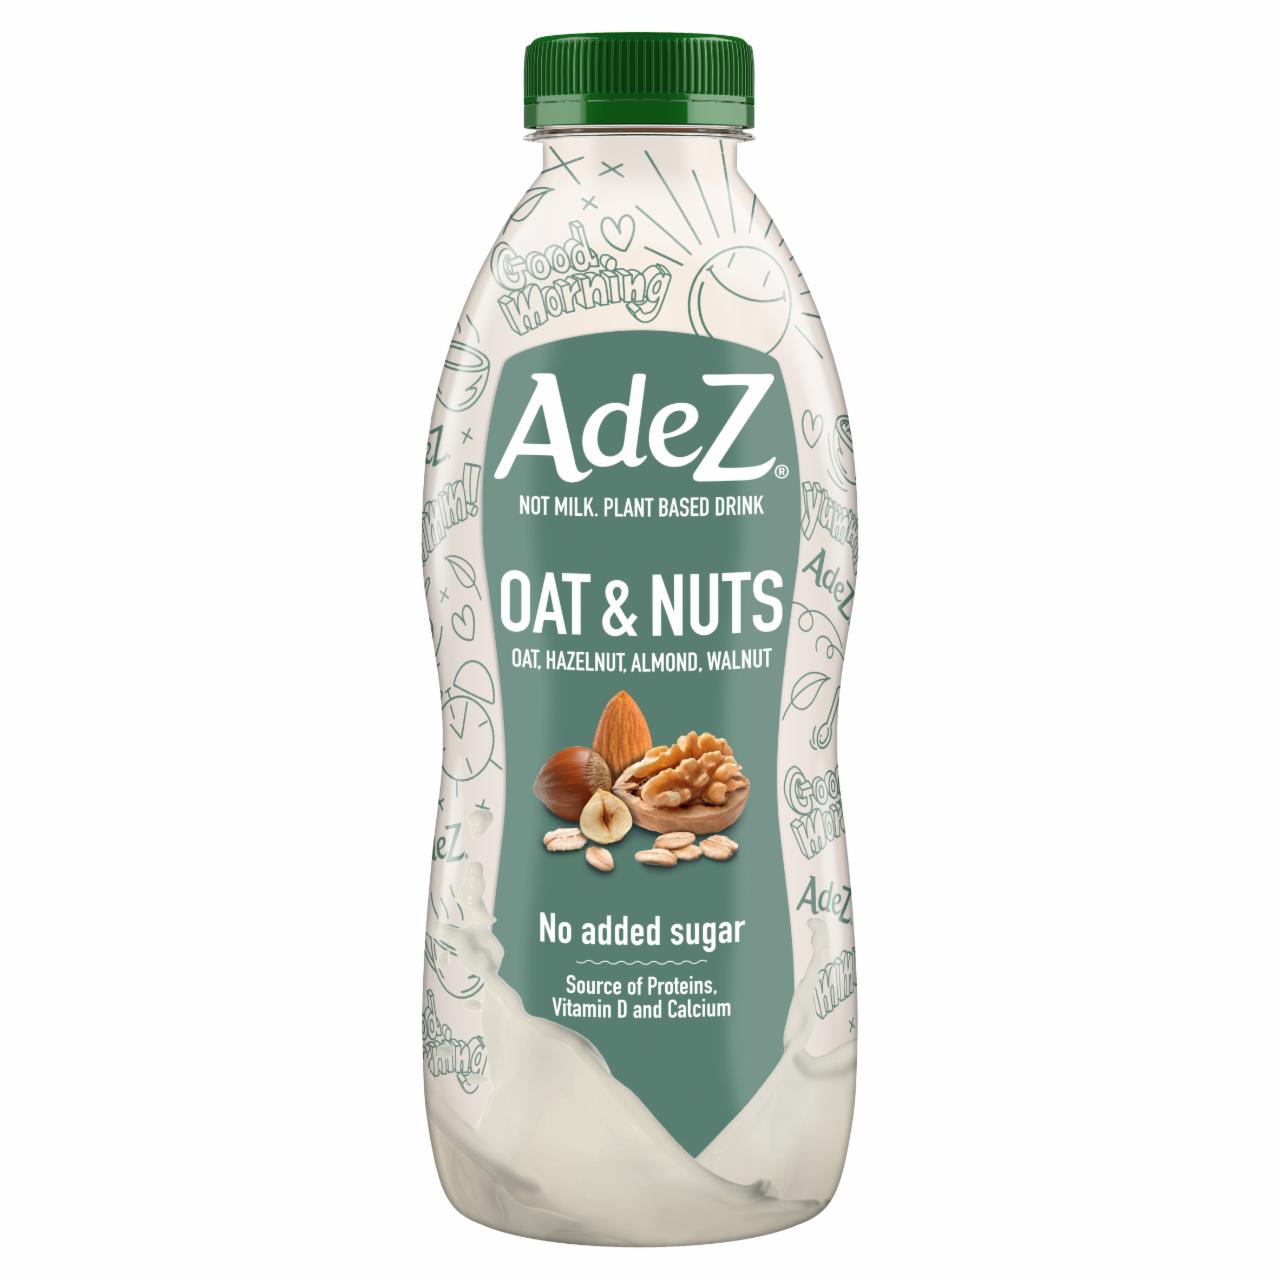 Fotografie - Oat & Nuts No added sugar AdeZ